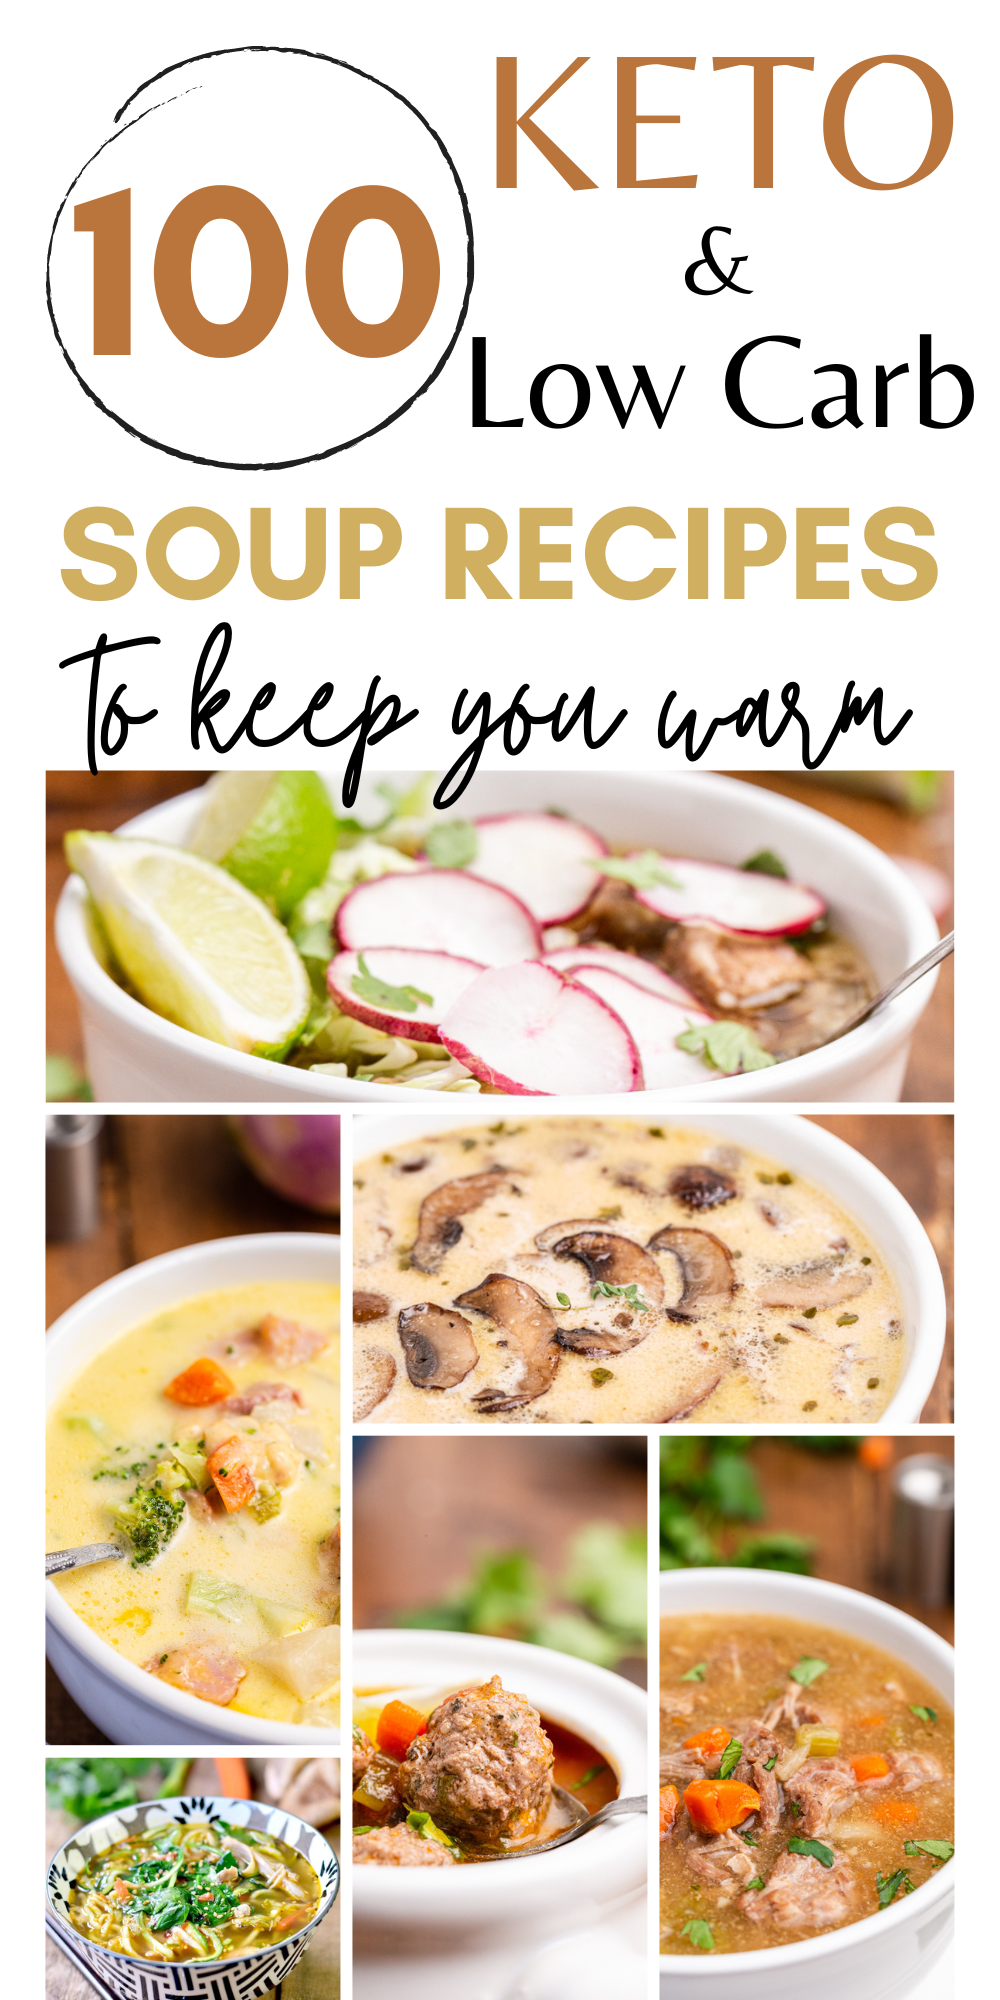 100 Keto & Low Carb Soup Recipes